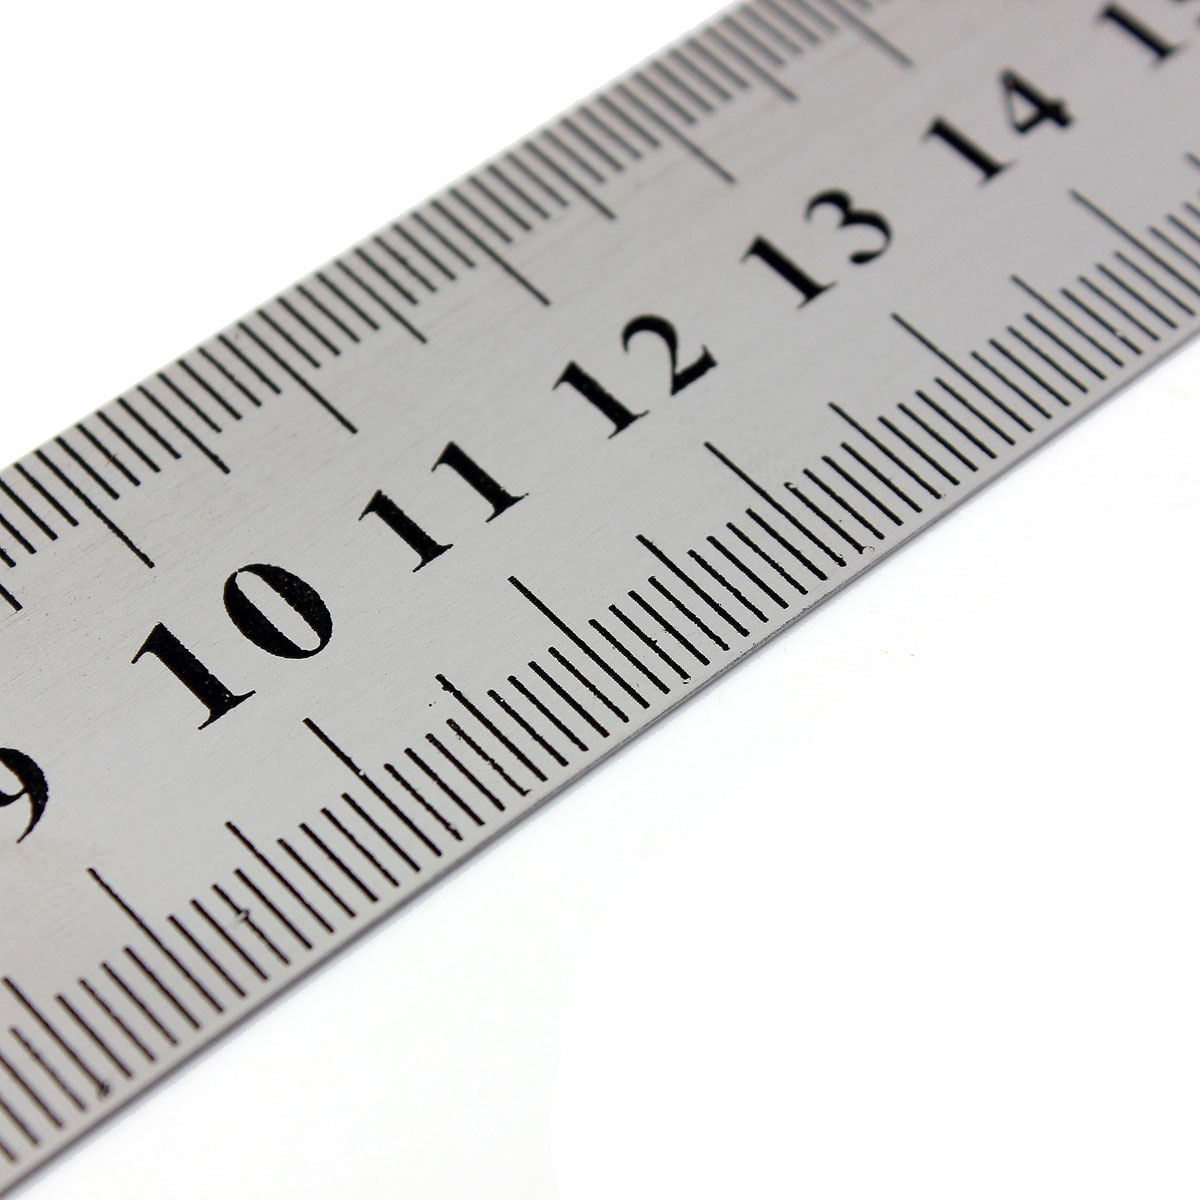 ruler half way point measure